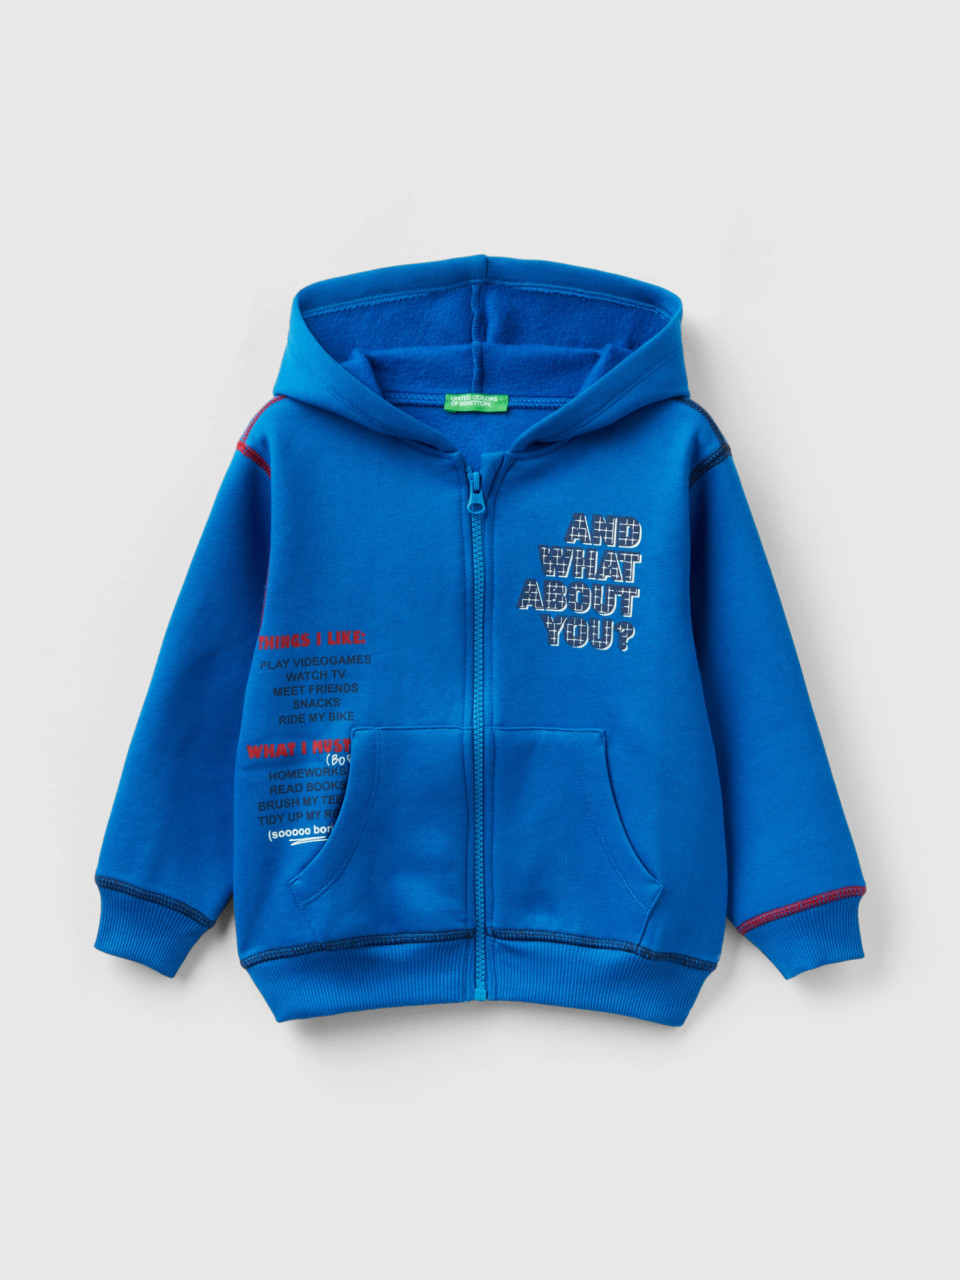 Benetton, Oversized Sweatshirt With Hood And Print, Bright Blue, Kids